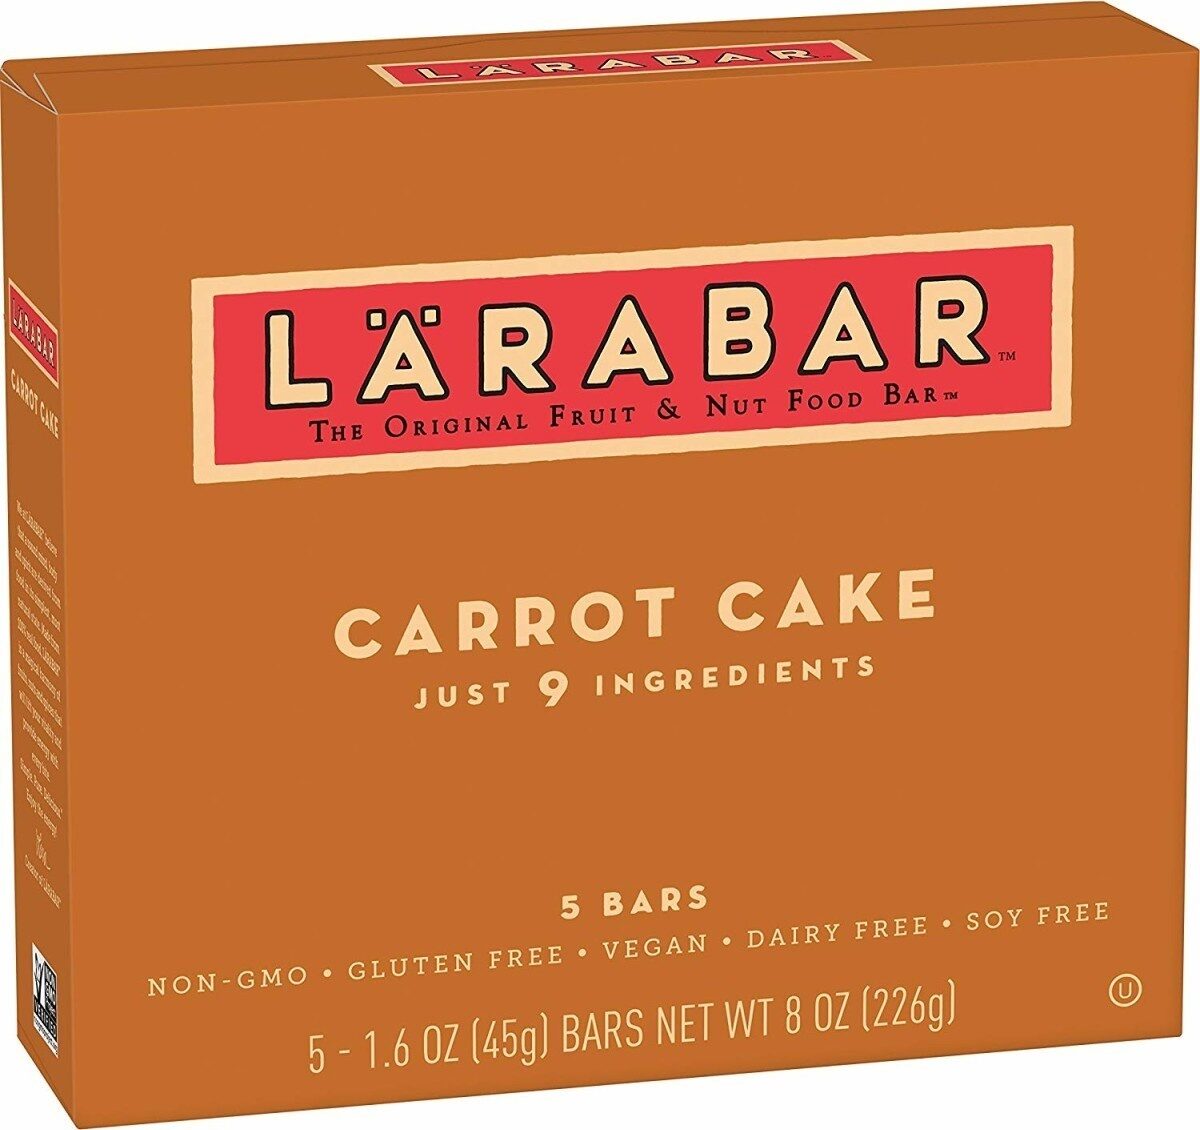 Larabar fruit nut bar carrot cake gluten free - Product